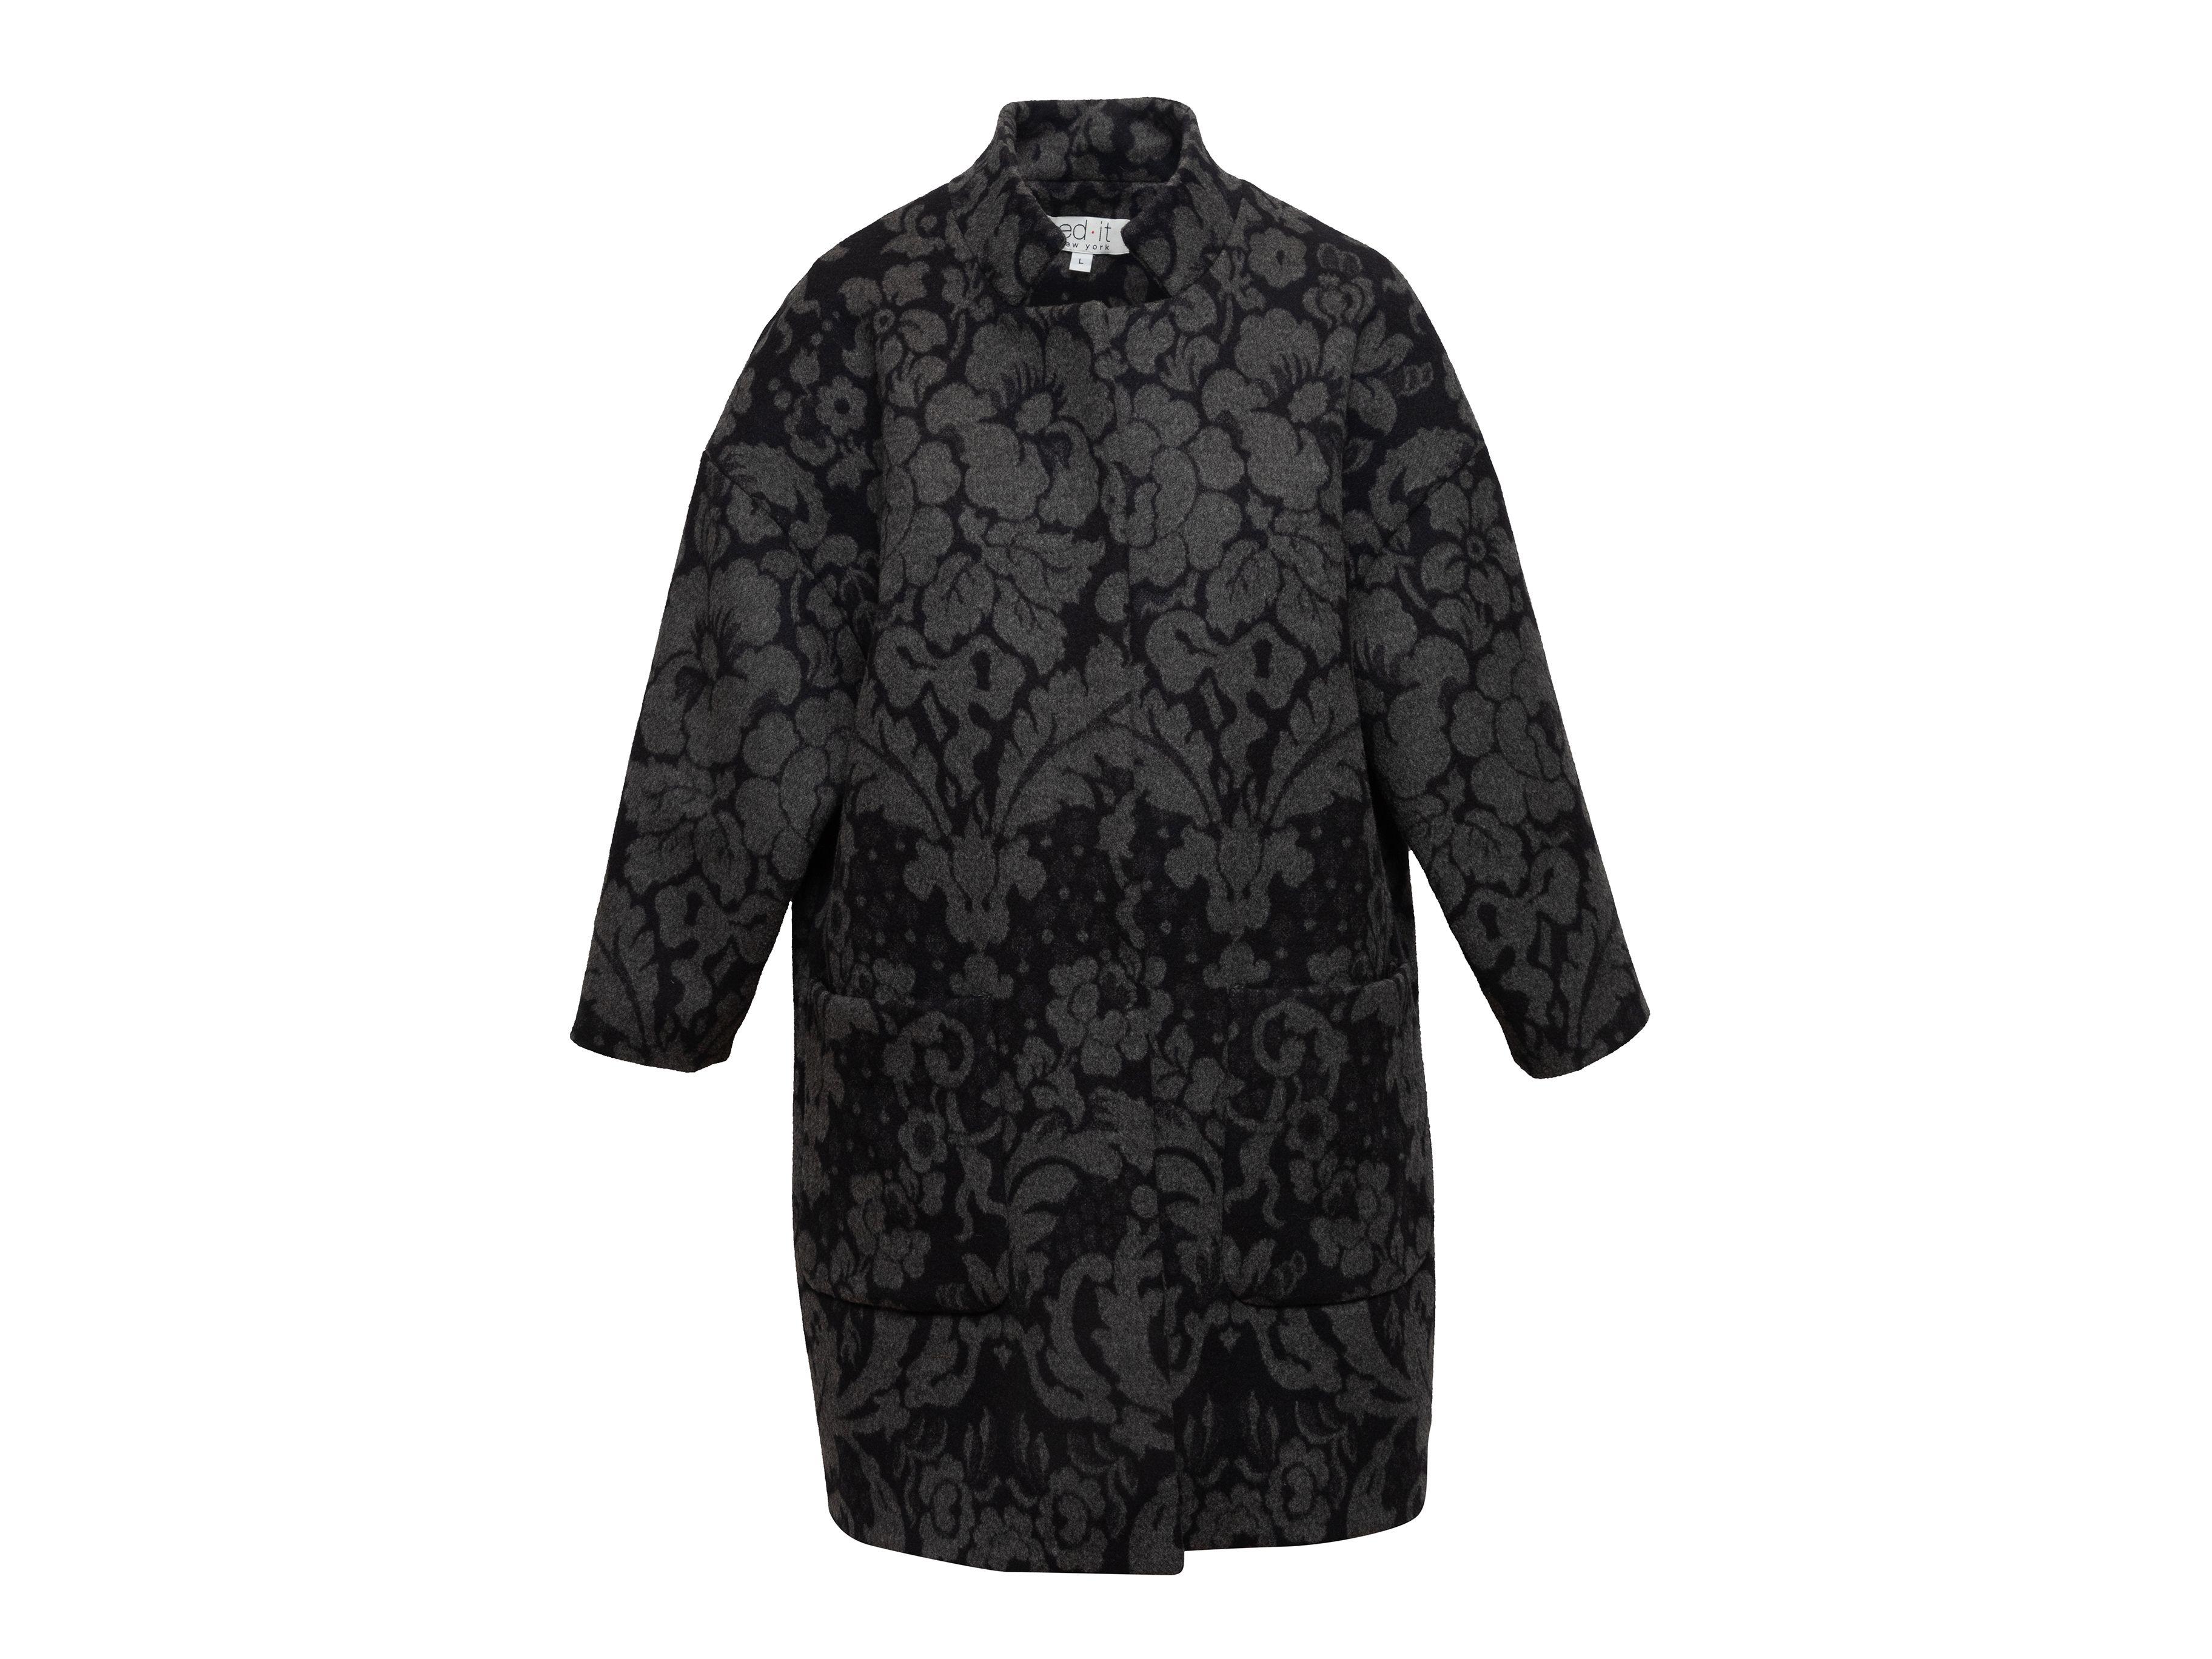 Women's Edit New York Black & Grey Floral Patterned Coat